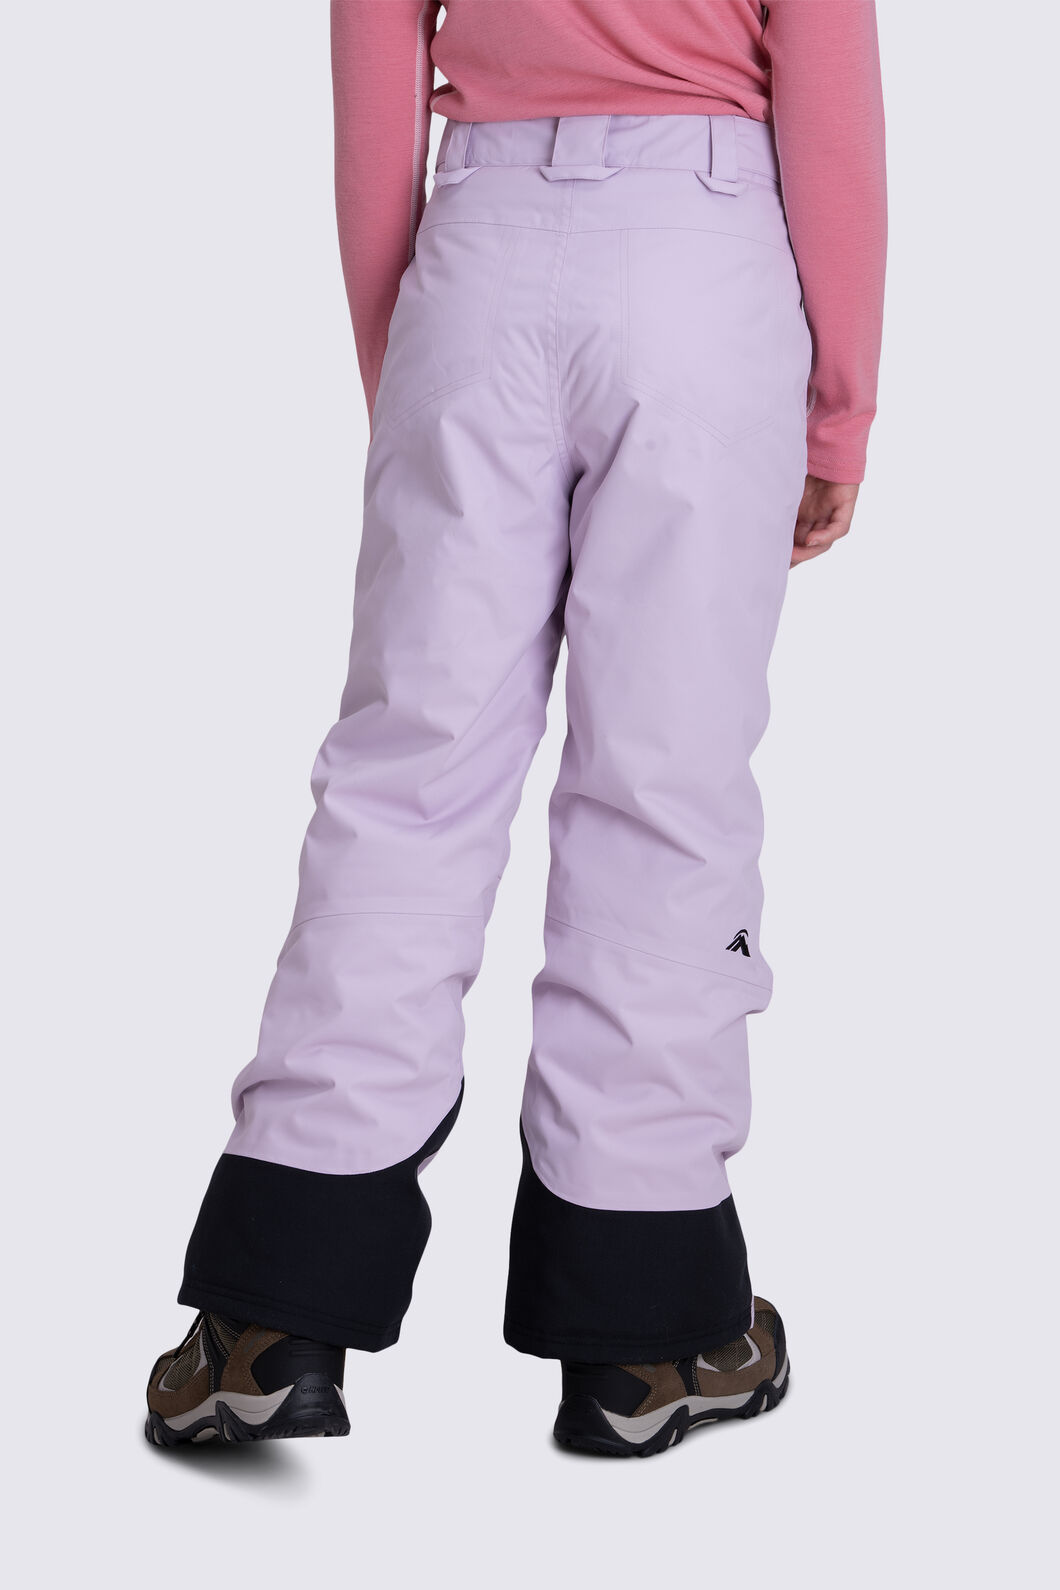 Macpac Kids' Spree Reflex™ Ski Pants